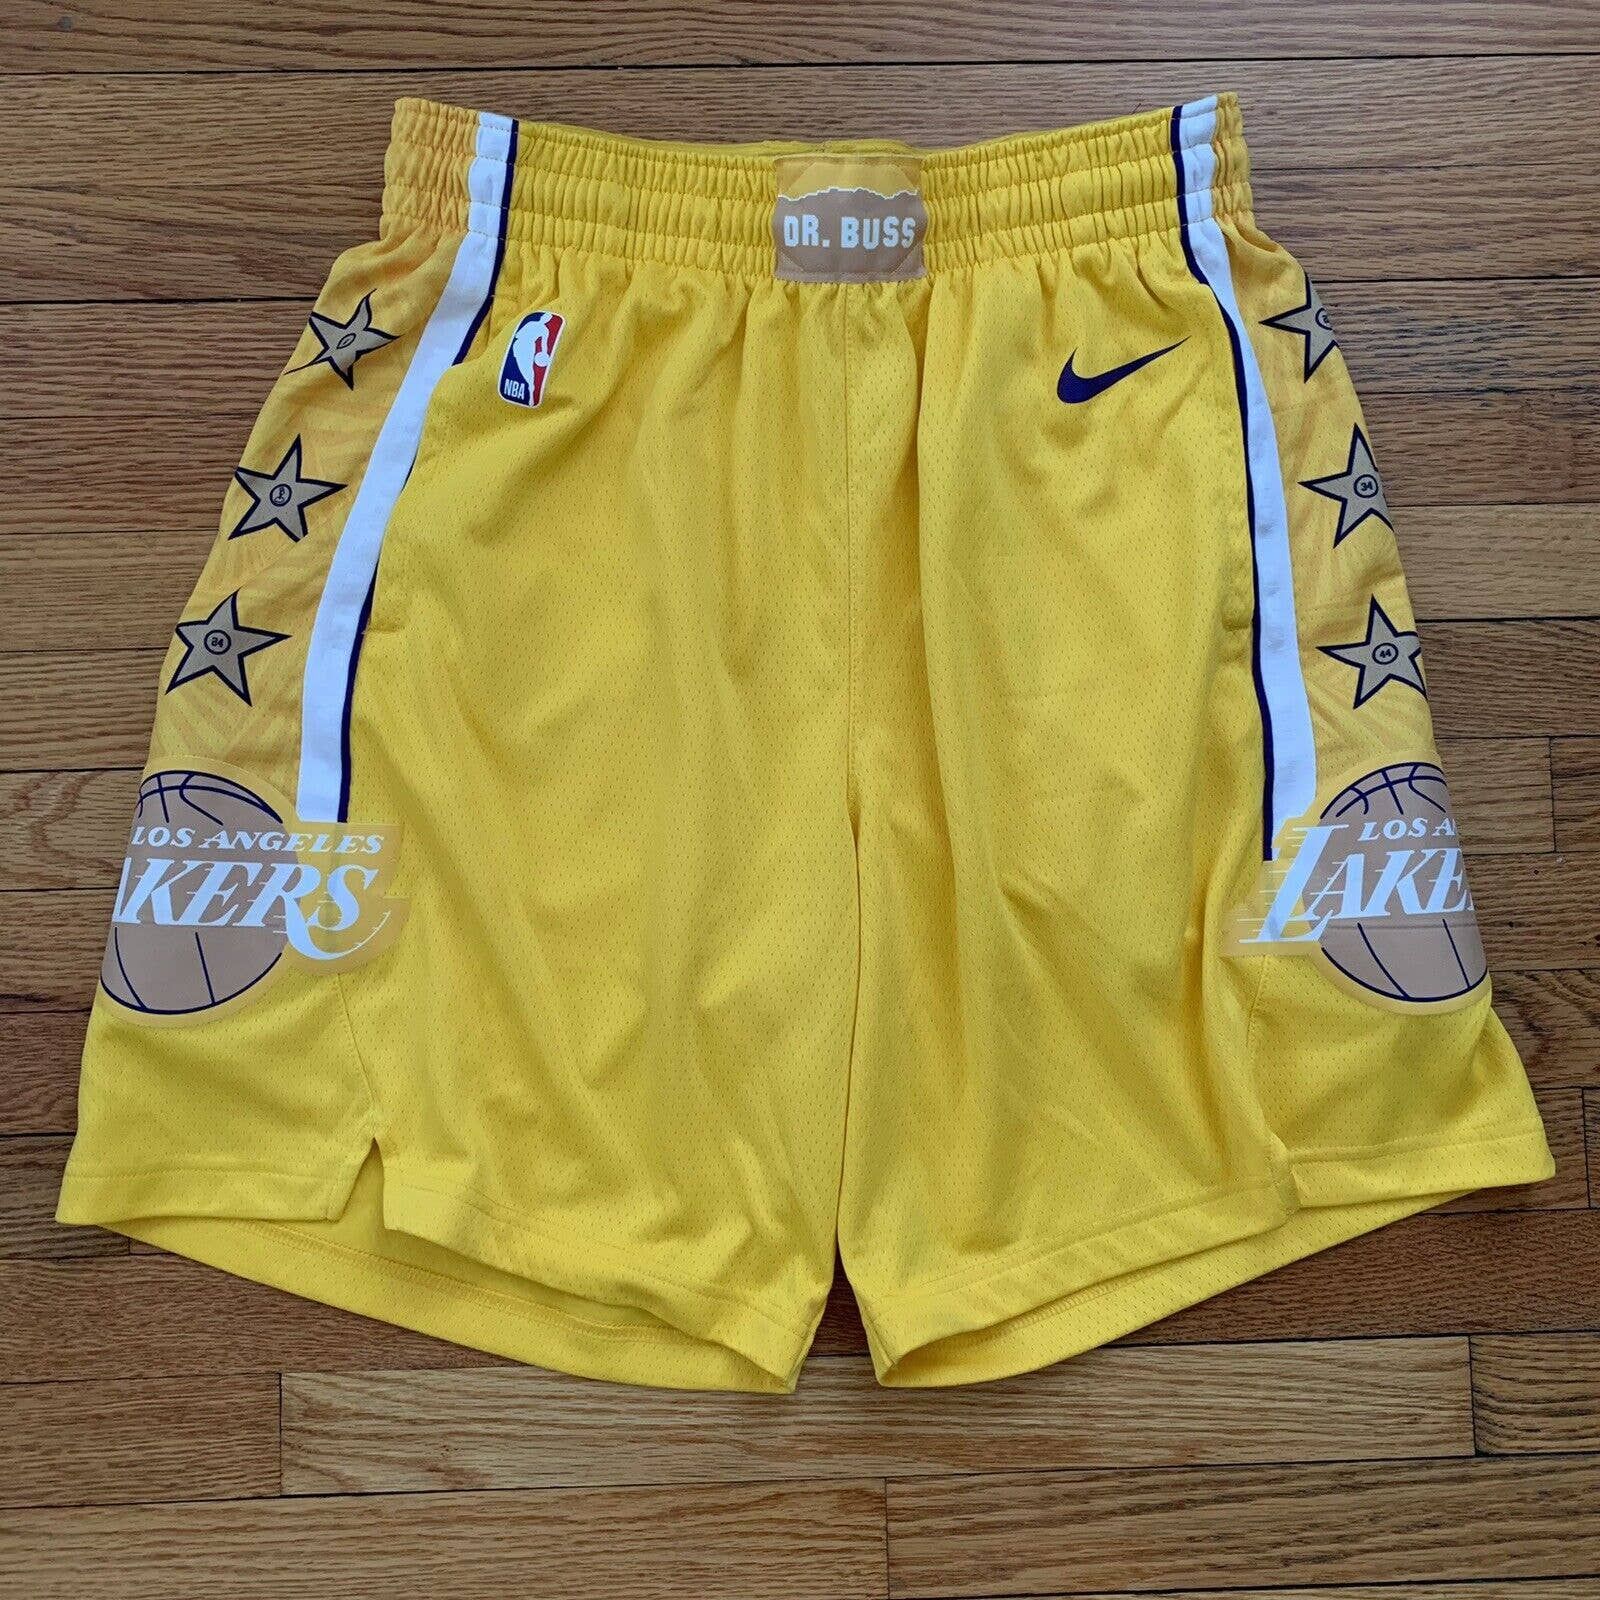 lakers city edition shorts